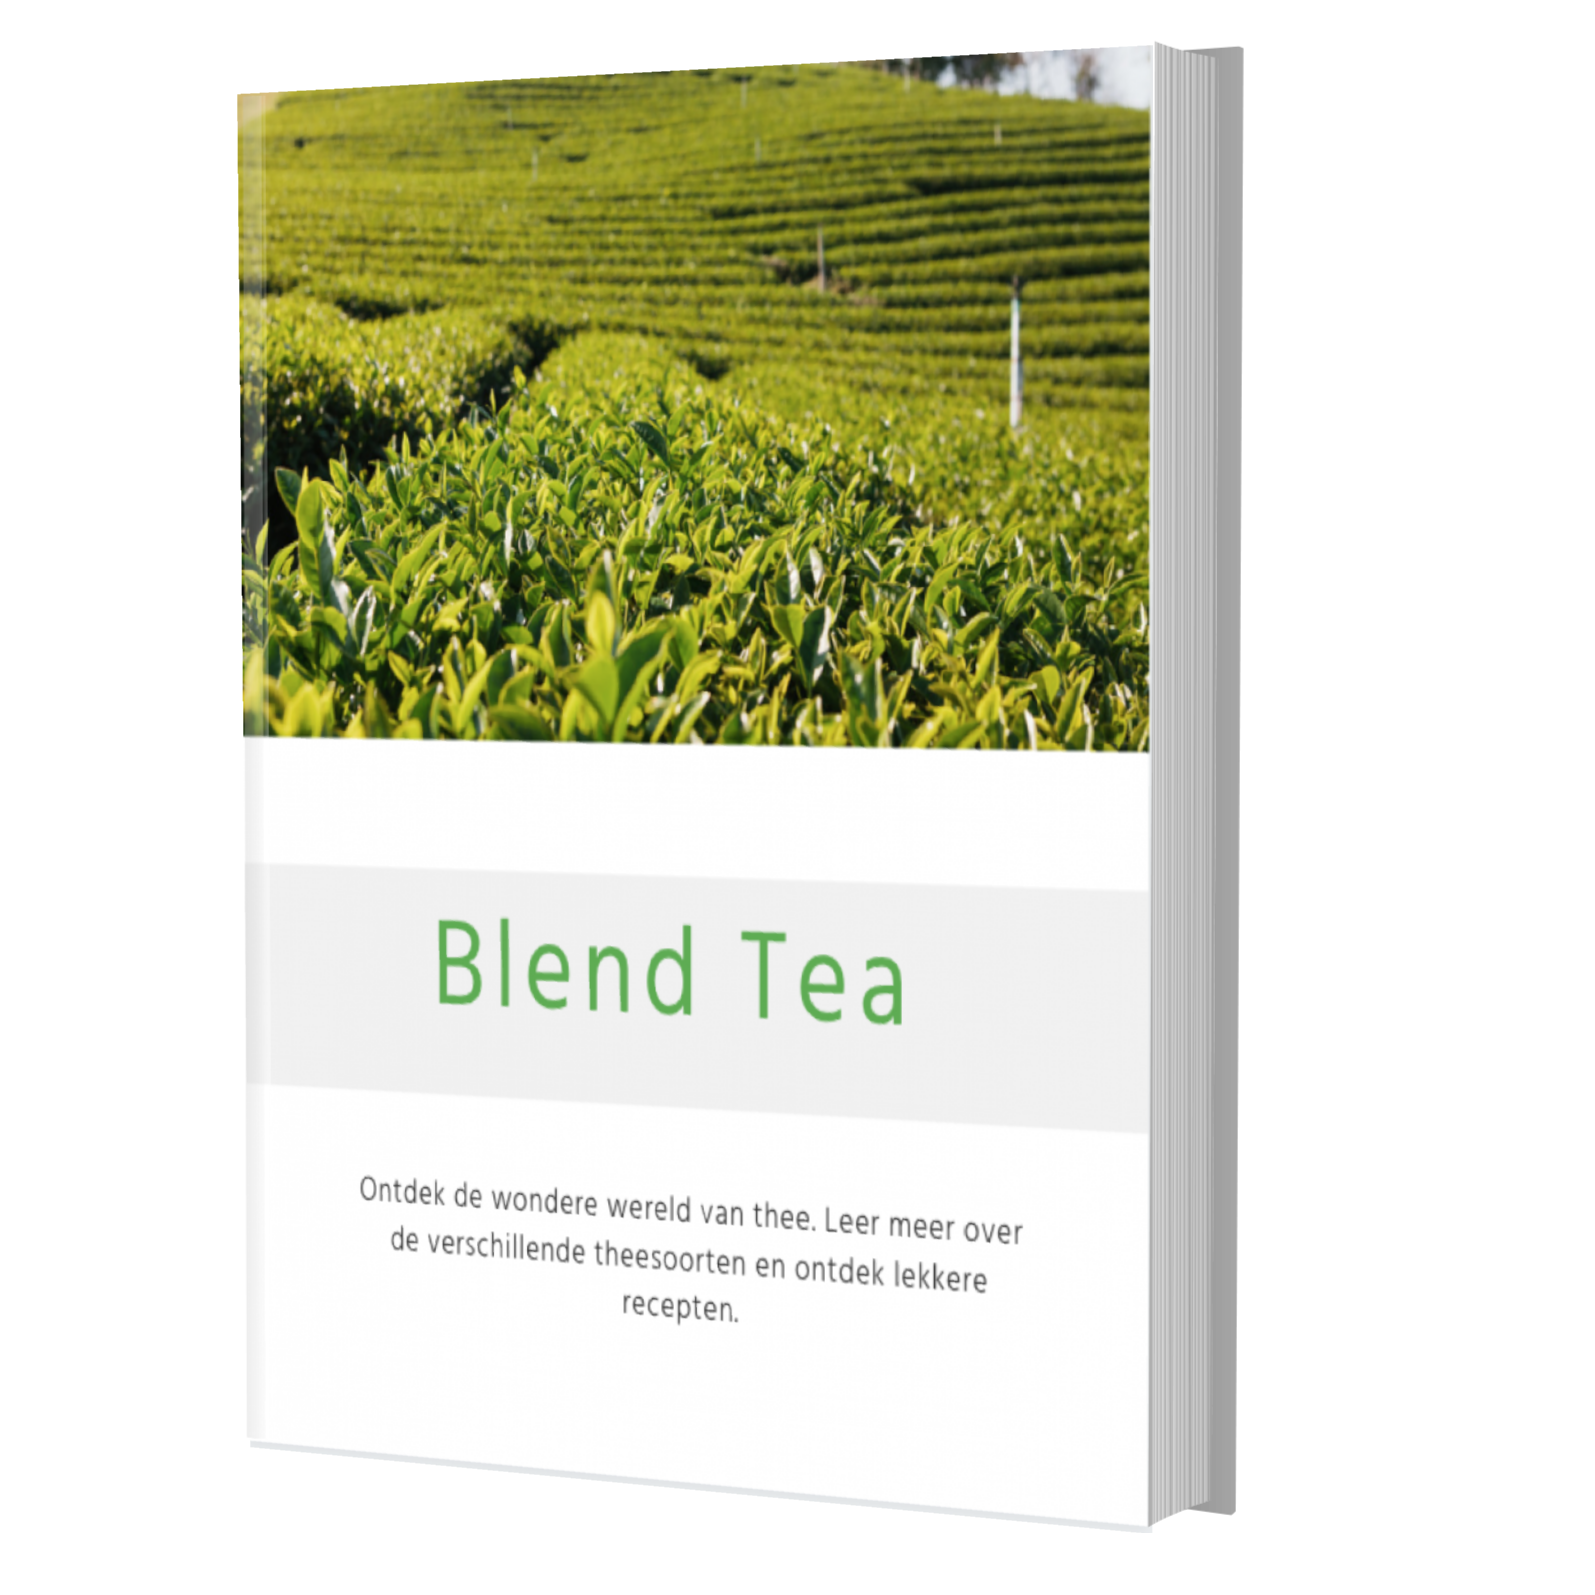 Blend Tea e-book: thee recepten, inspiratie, productieproces